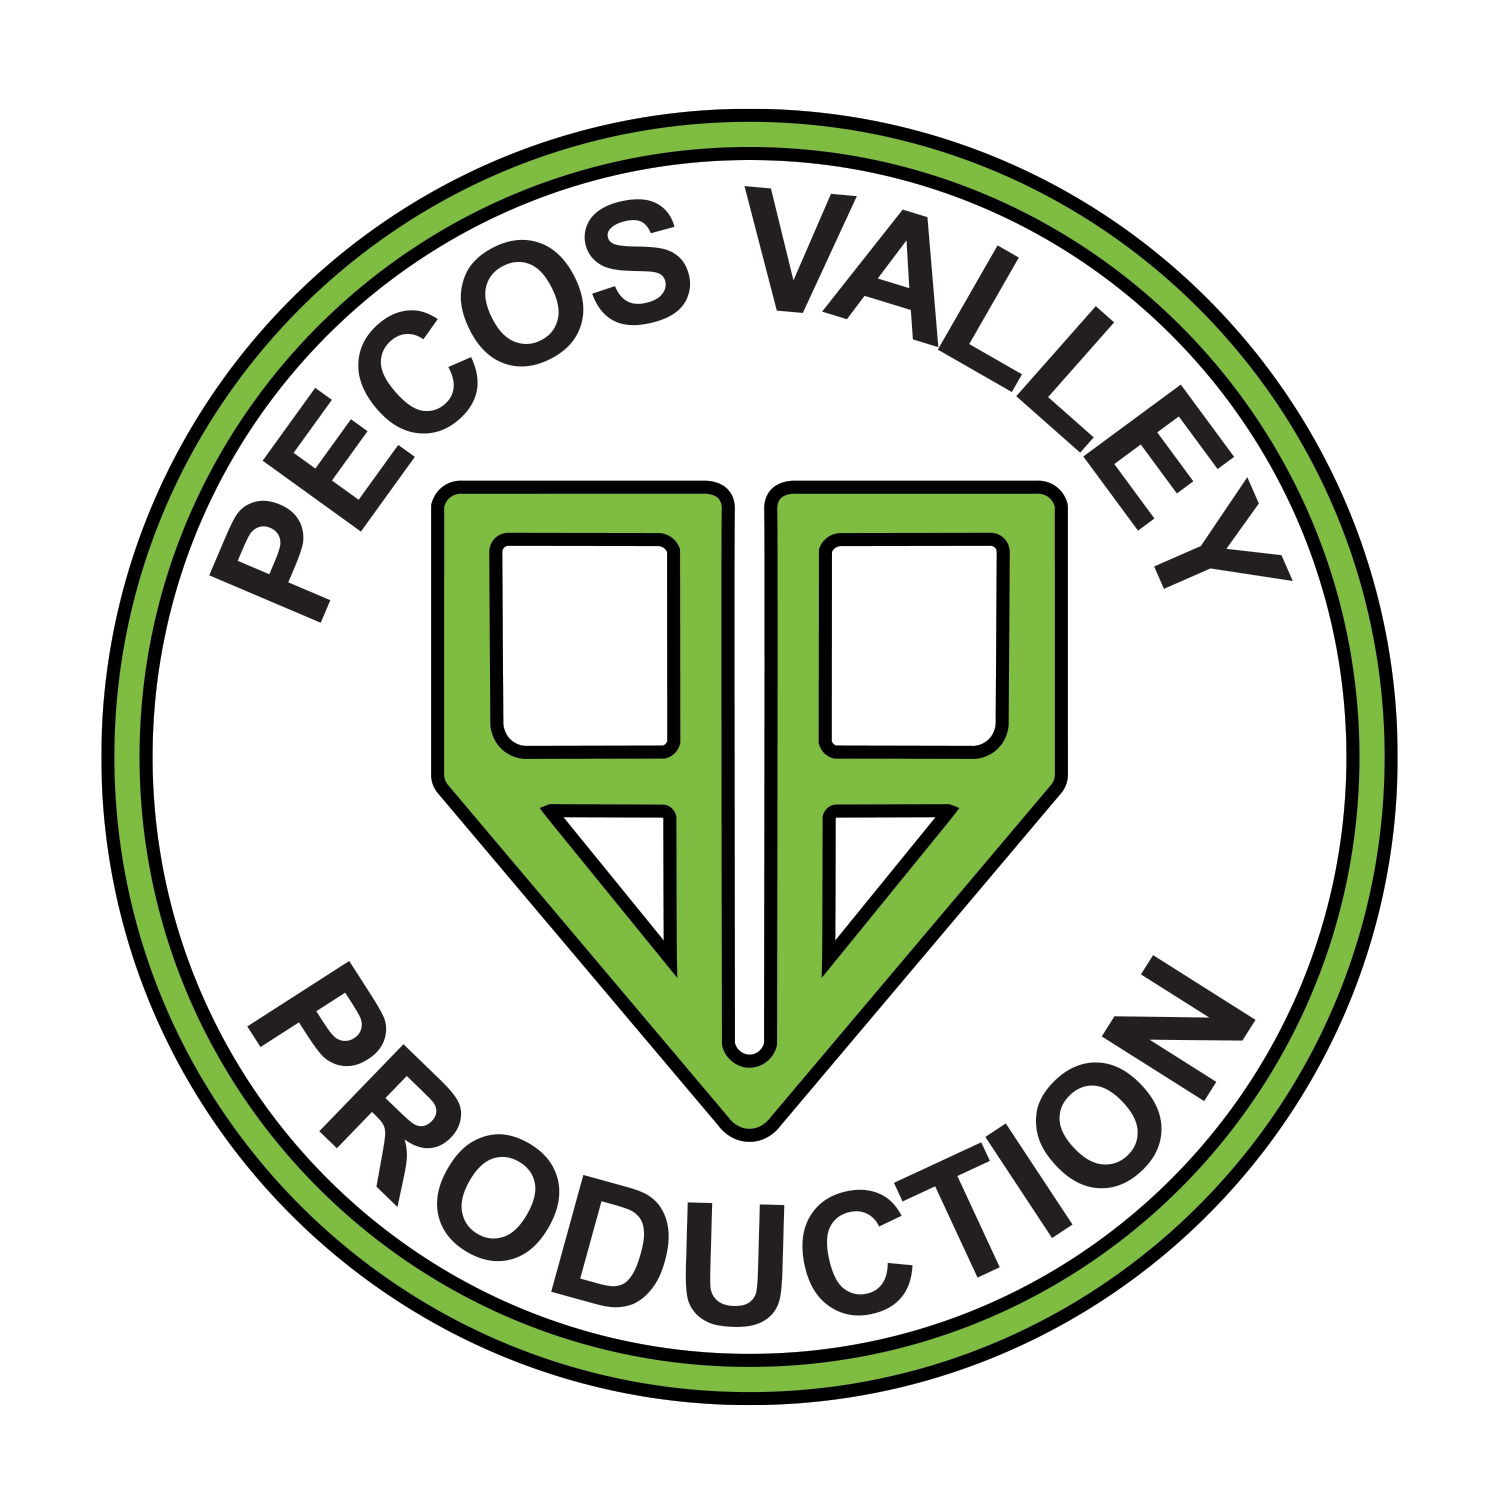 Pecos Valley Production logo